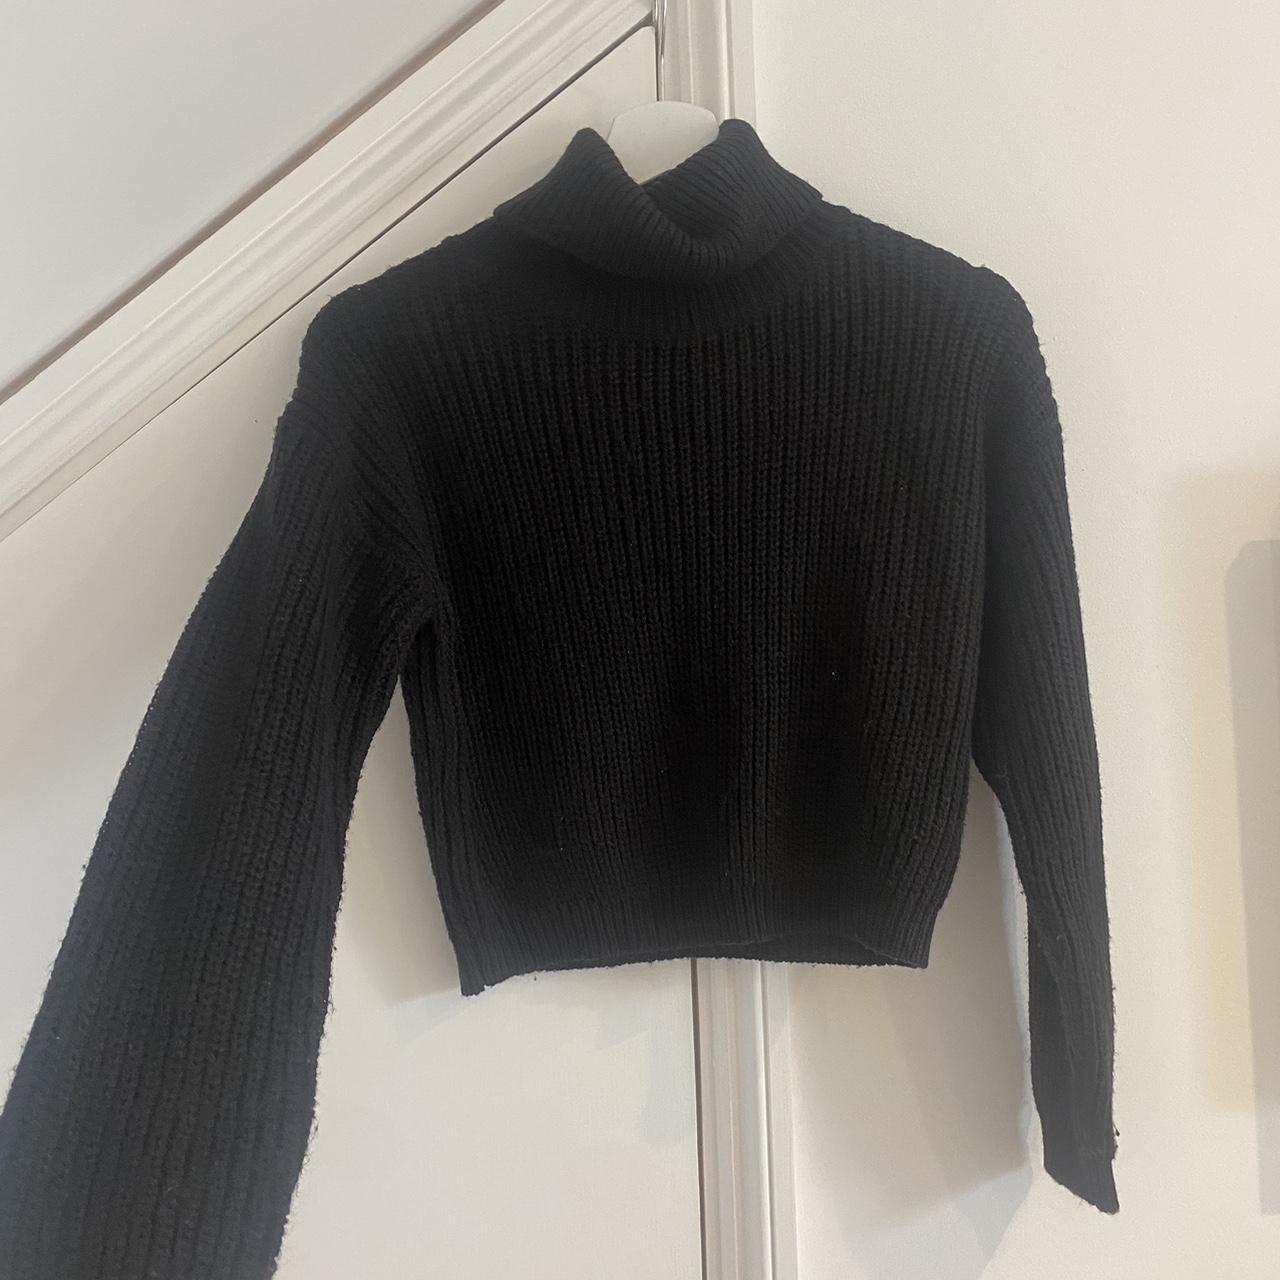 Boohoo - black crop knit jumper with turtle neck.... - Depop